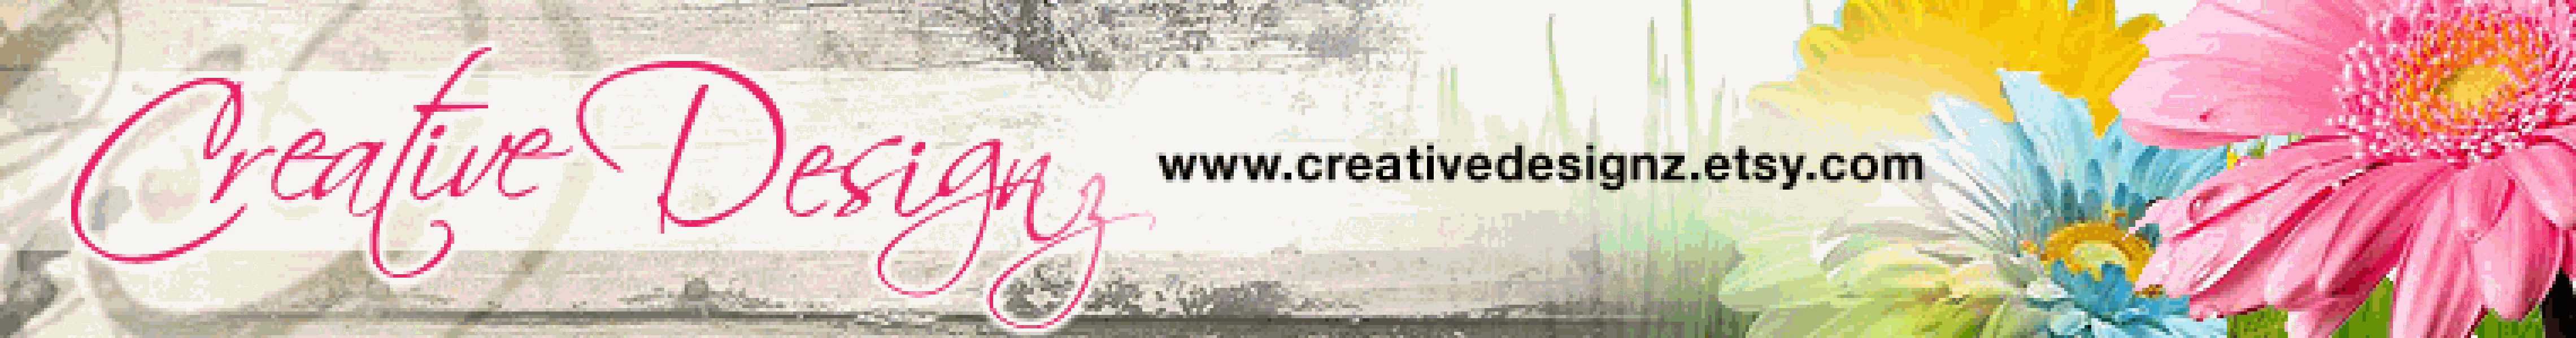 Creative Designs Banner Ad